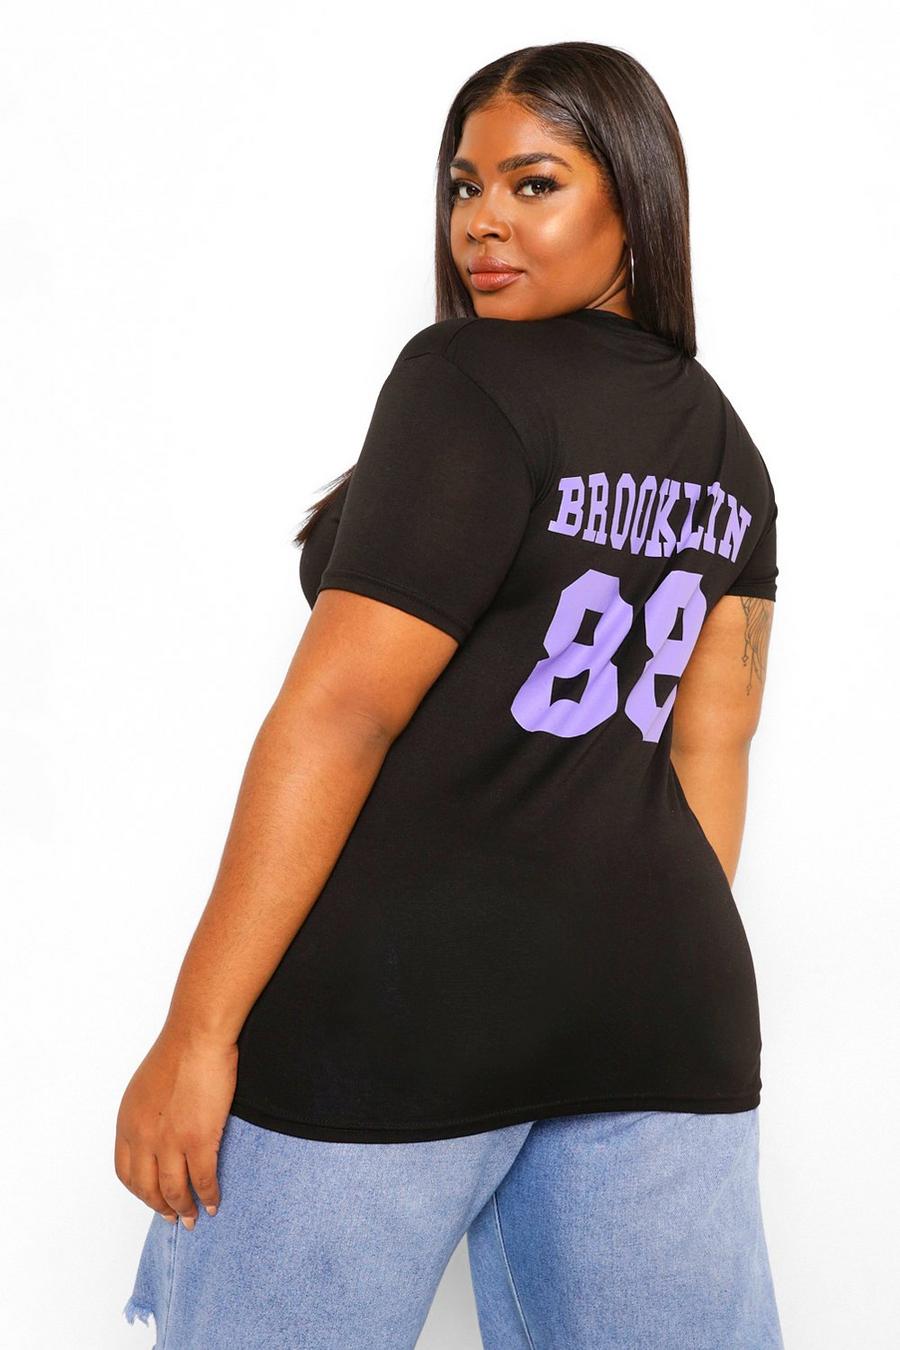 Grande taille - T-shirt basketball imprimé dans le dos "Brooklyn 88", Black image number 1